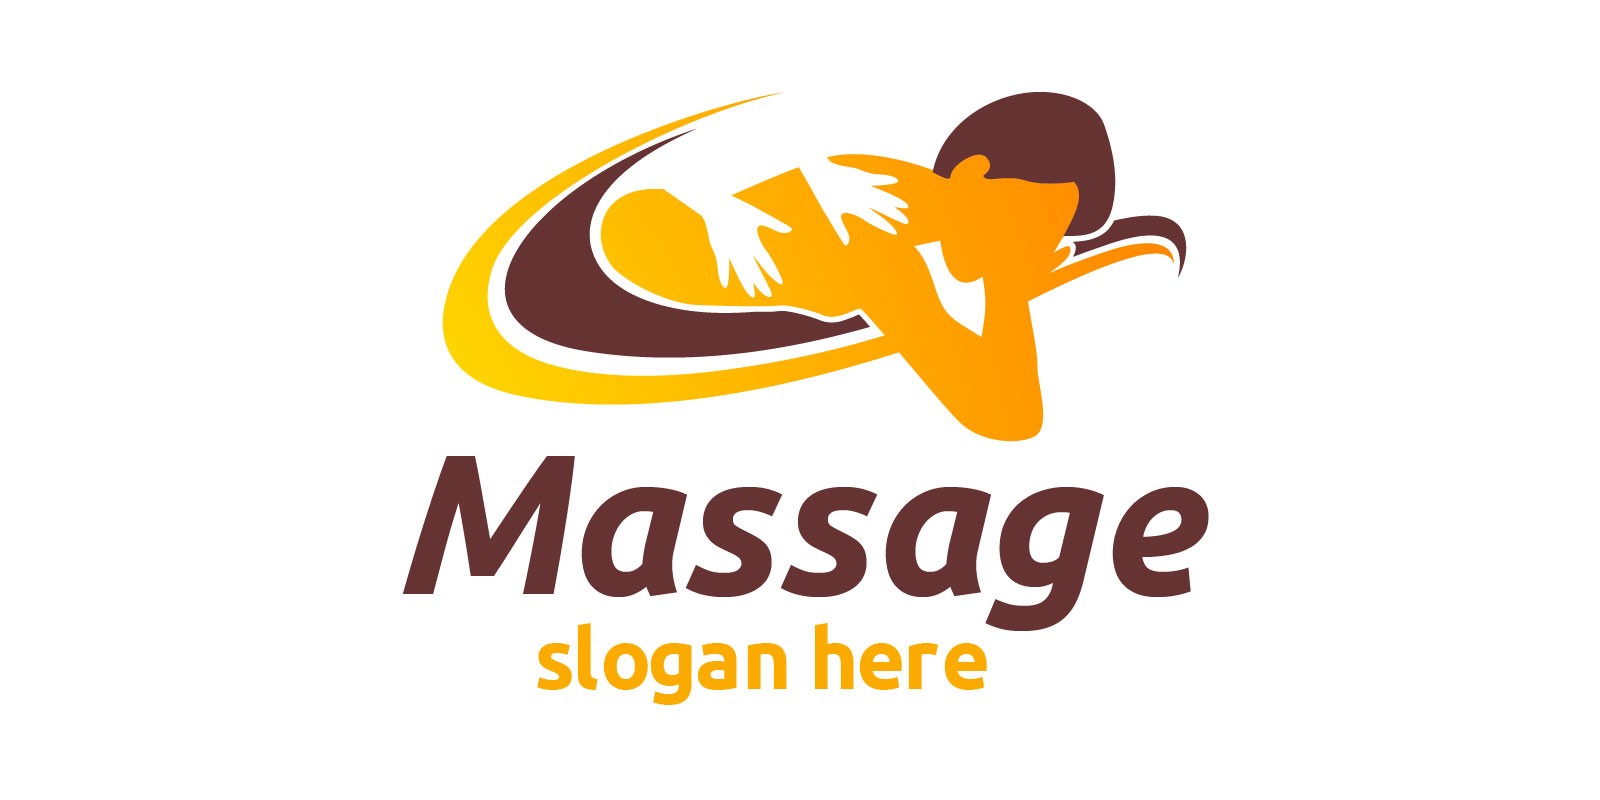 massage logo ideas 2